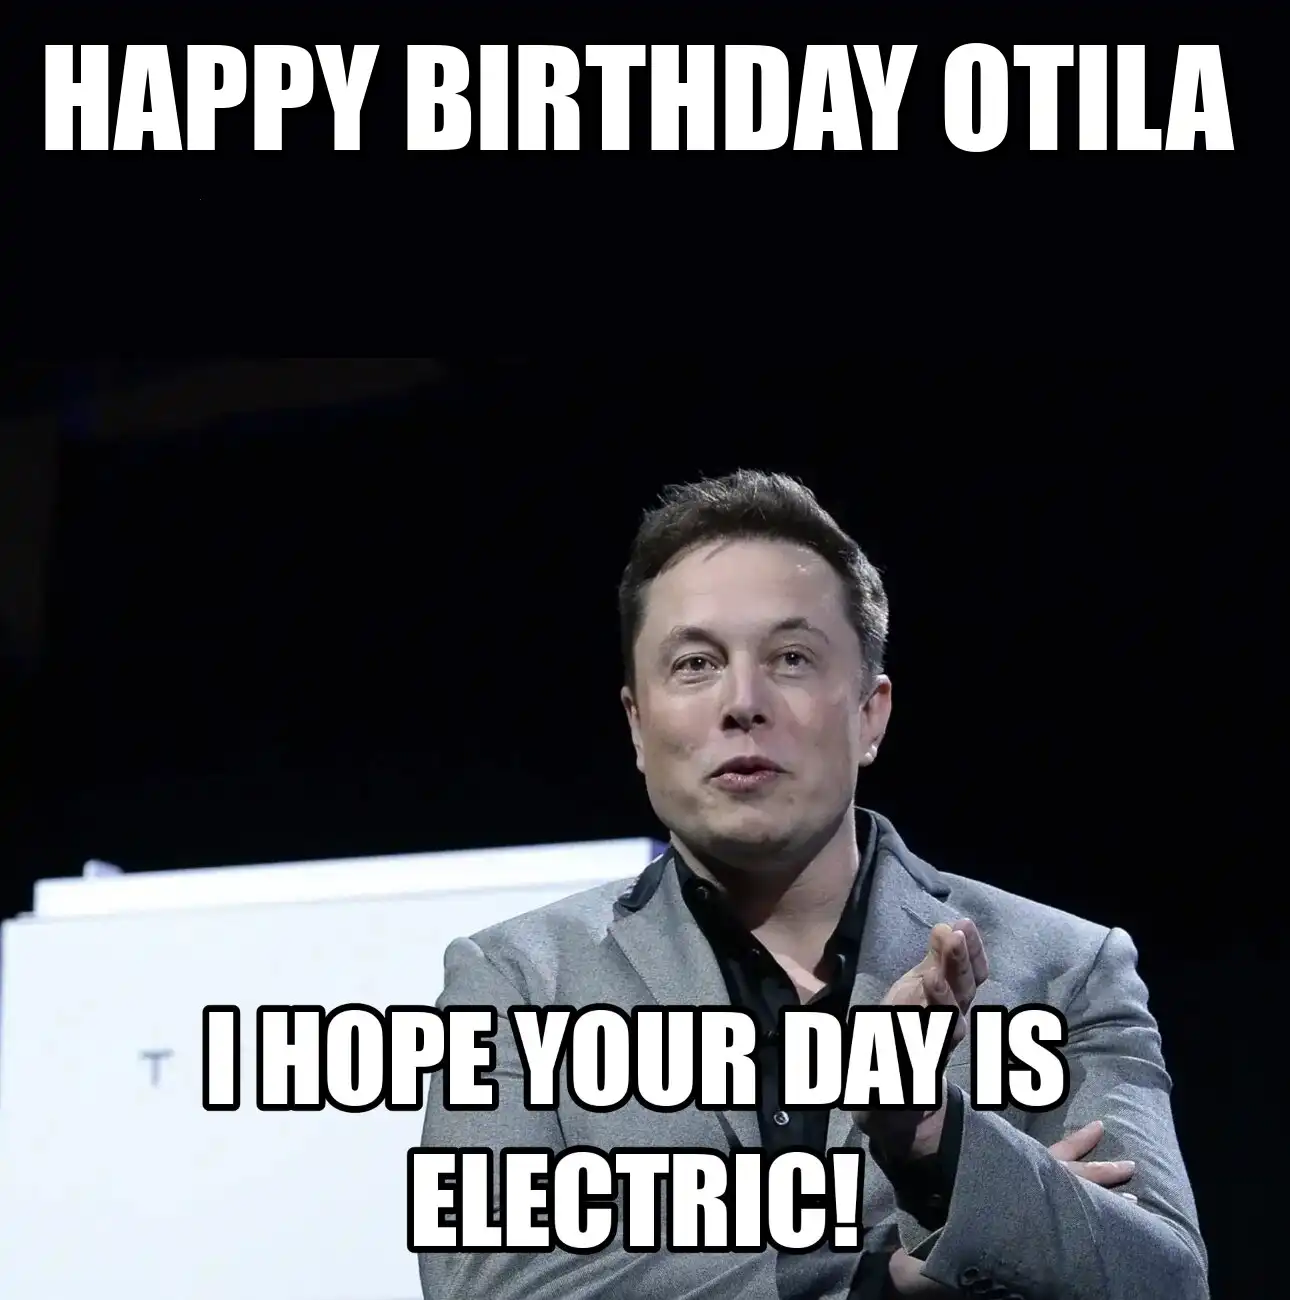 Happy Birthday Otila I Hope Your Day Is Electric Meme